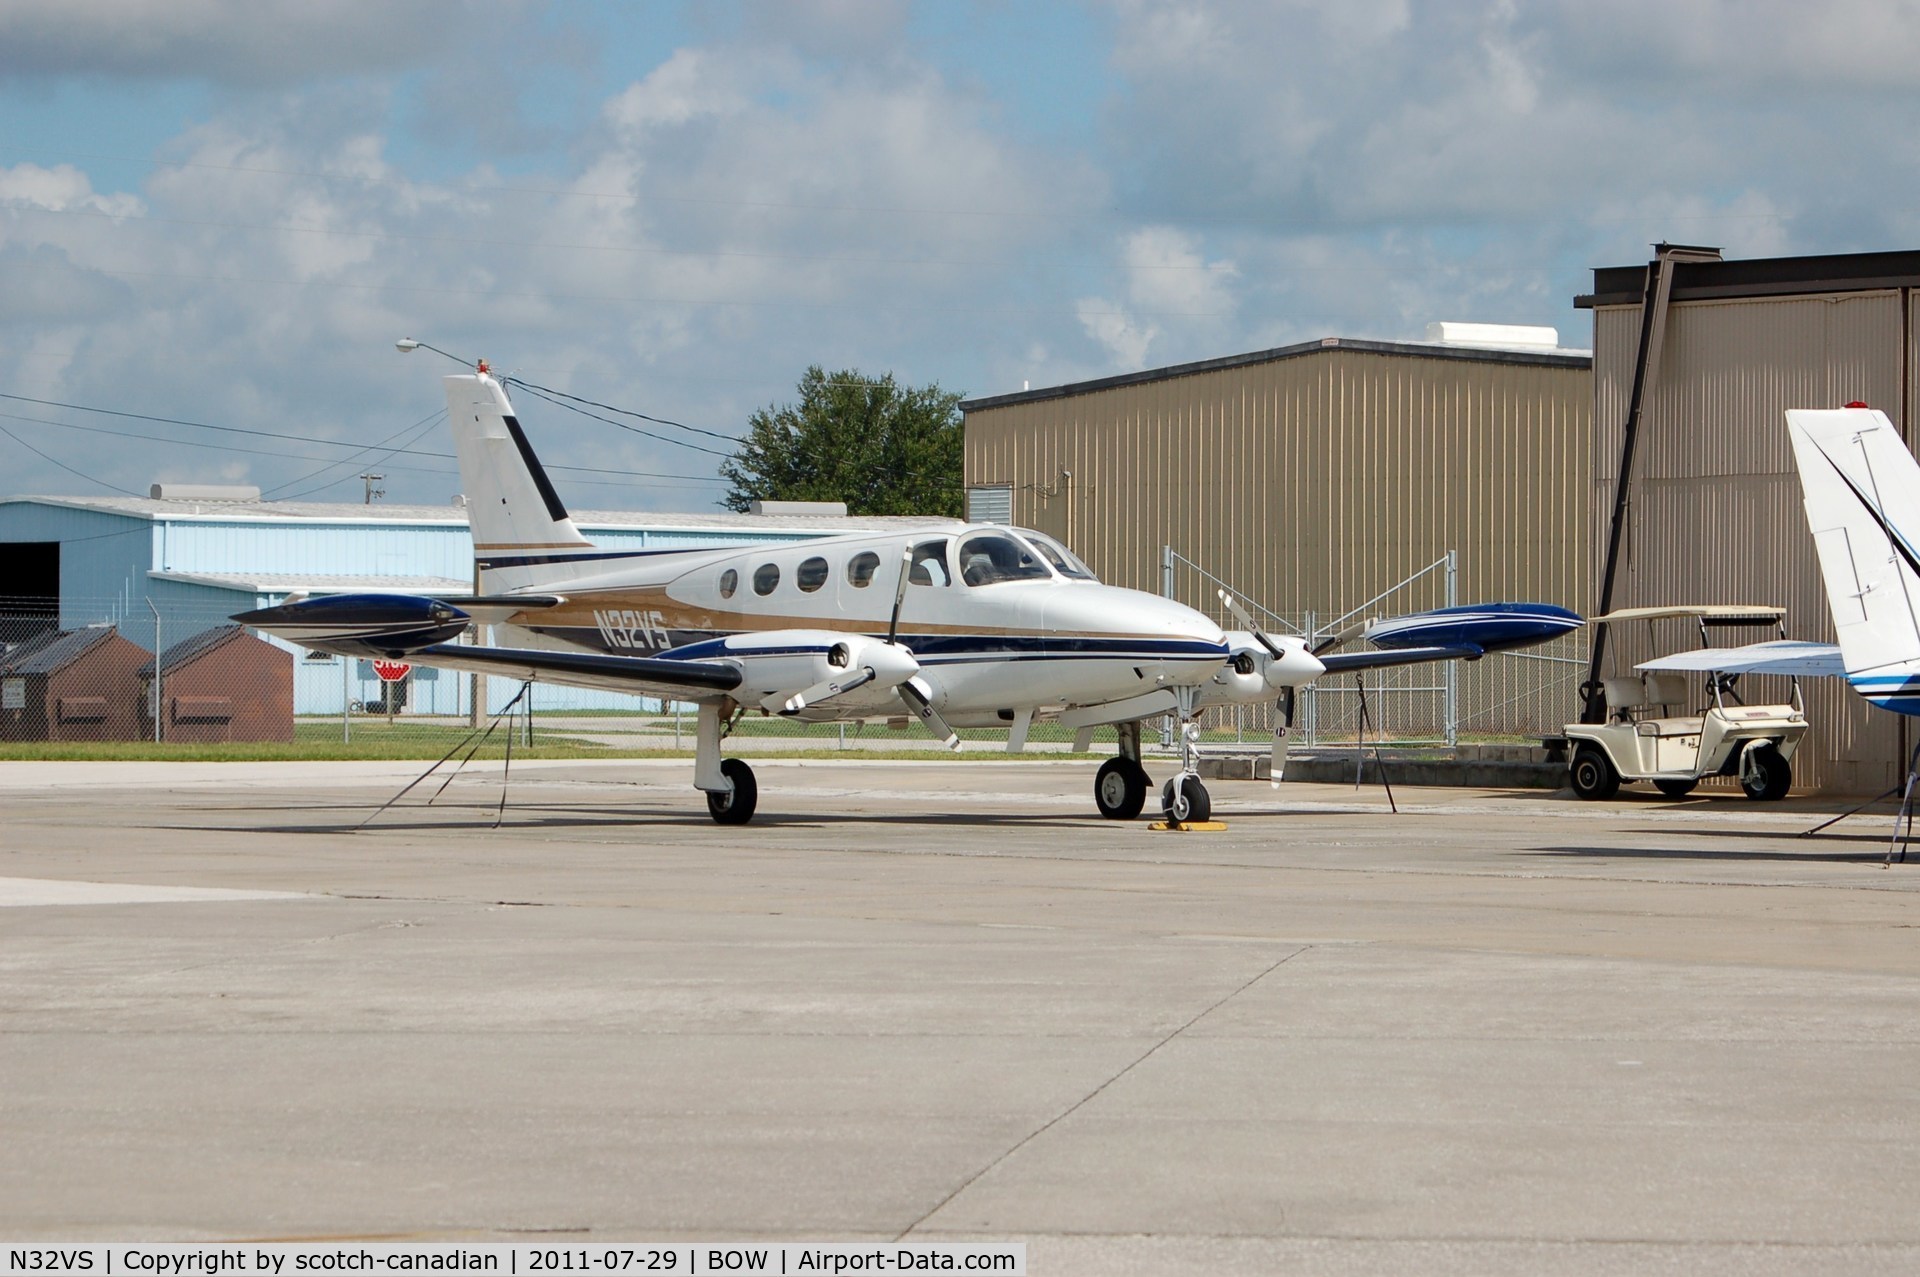 N32VS, 1972 Cessna 340 C/N 340-0025, 1972 Cessna 340 N32VS at Bartow Municipal Airport, Bartow, FL